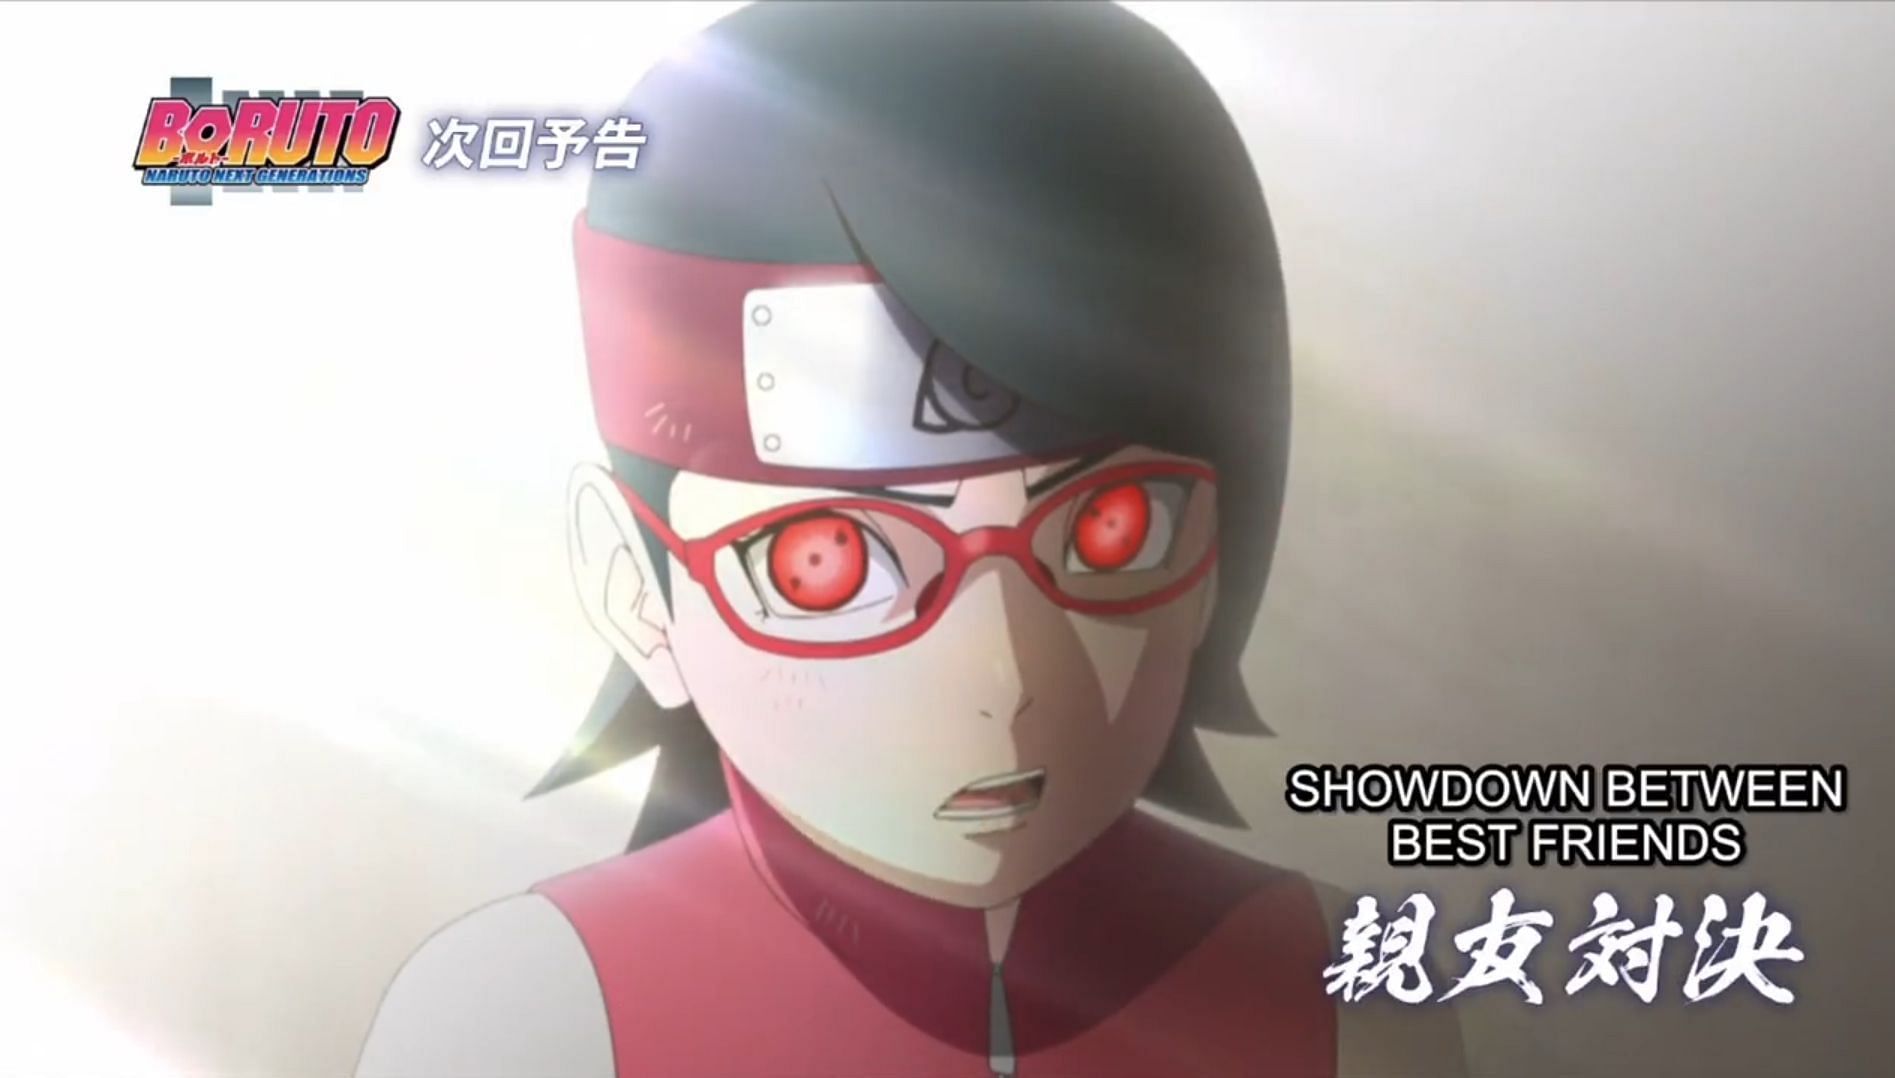 Boruto: Naruto Next Generations (Image via Pierrot)